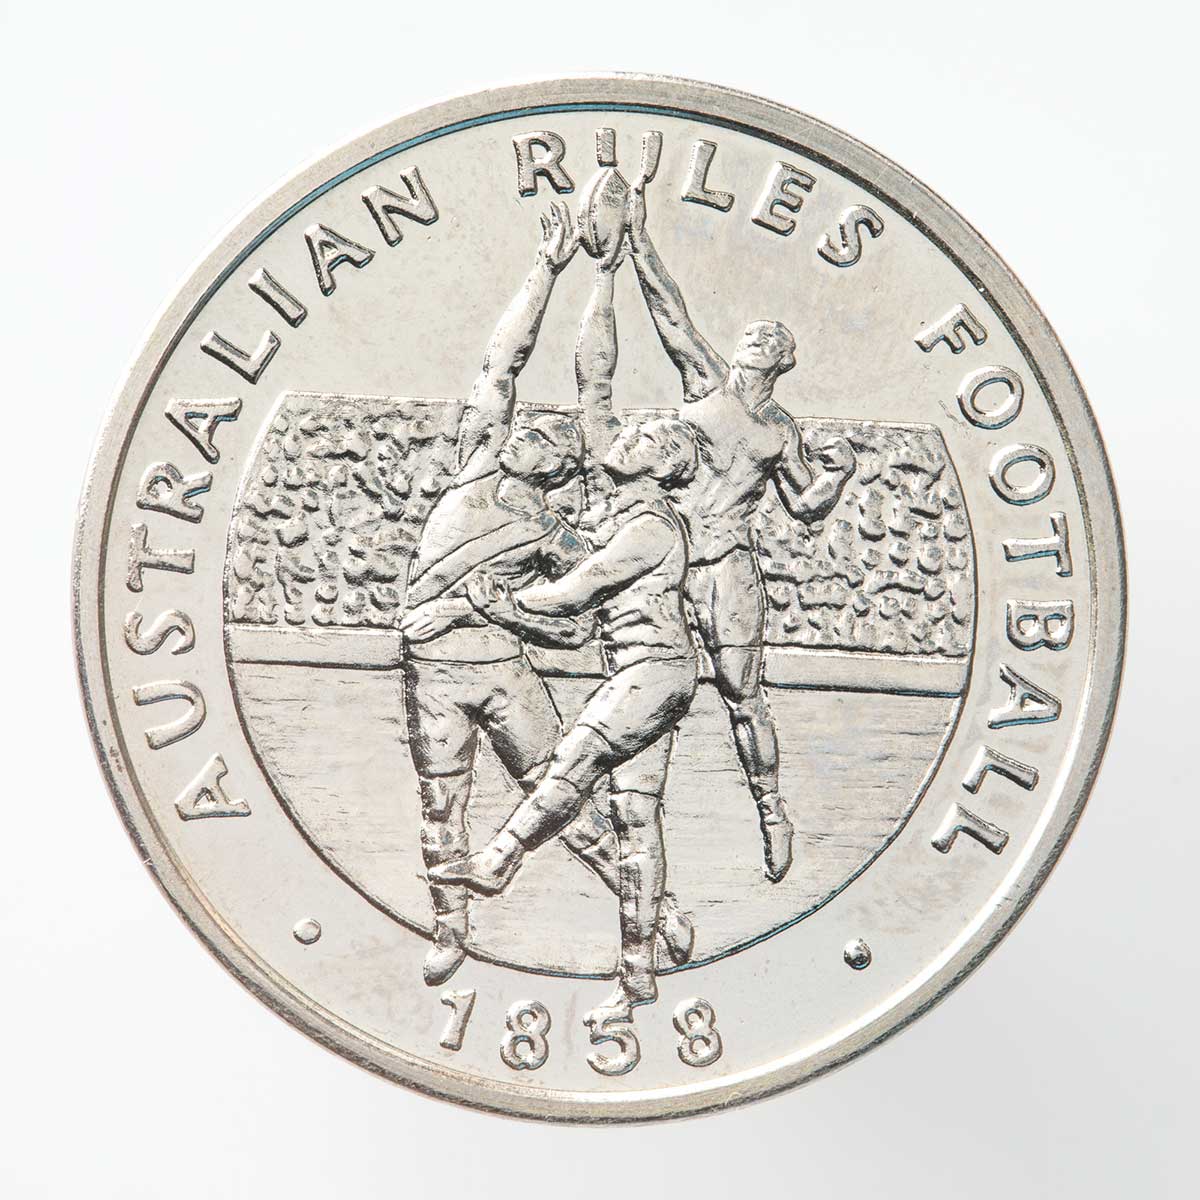 <p>Australian bicentennial commemorative medal depicting Australian Rules Football</p>
